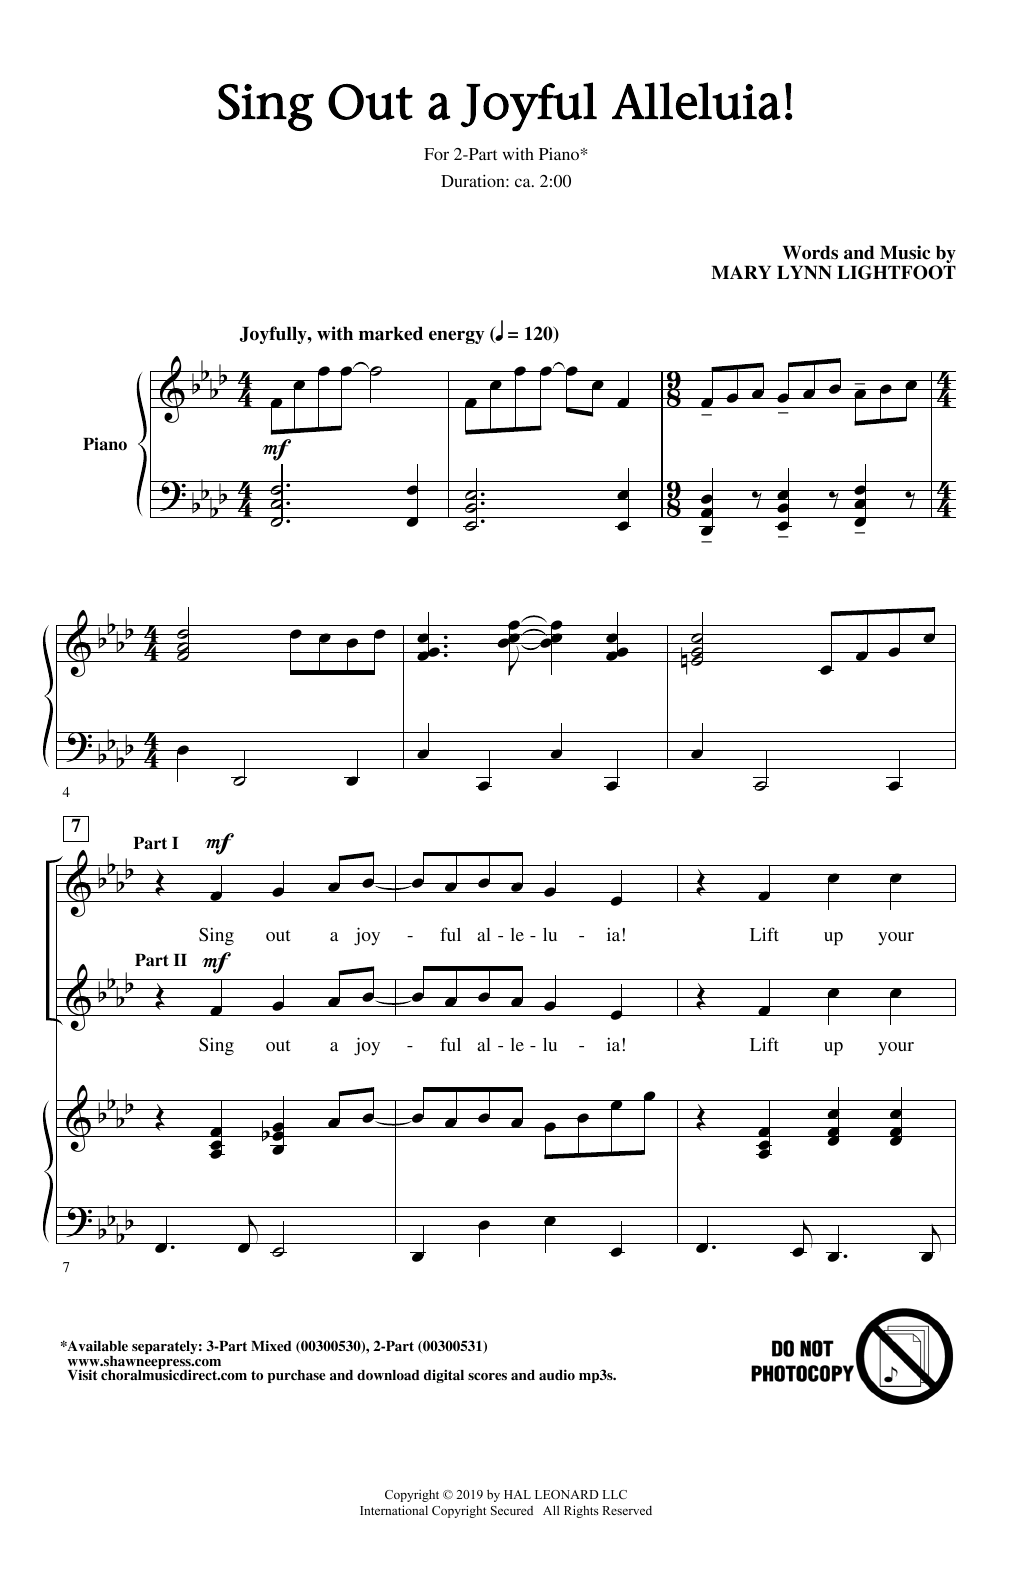 Mary Lynn Lightfoot Sing Out A Joyful Alleluia! sheet music notes and chords arranged for 2-Part Choir